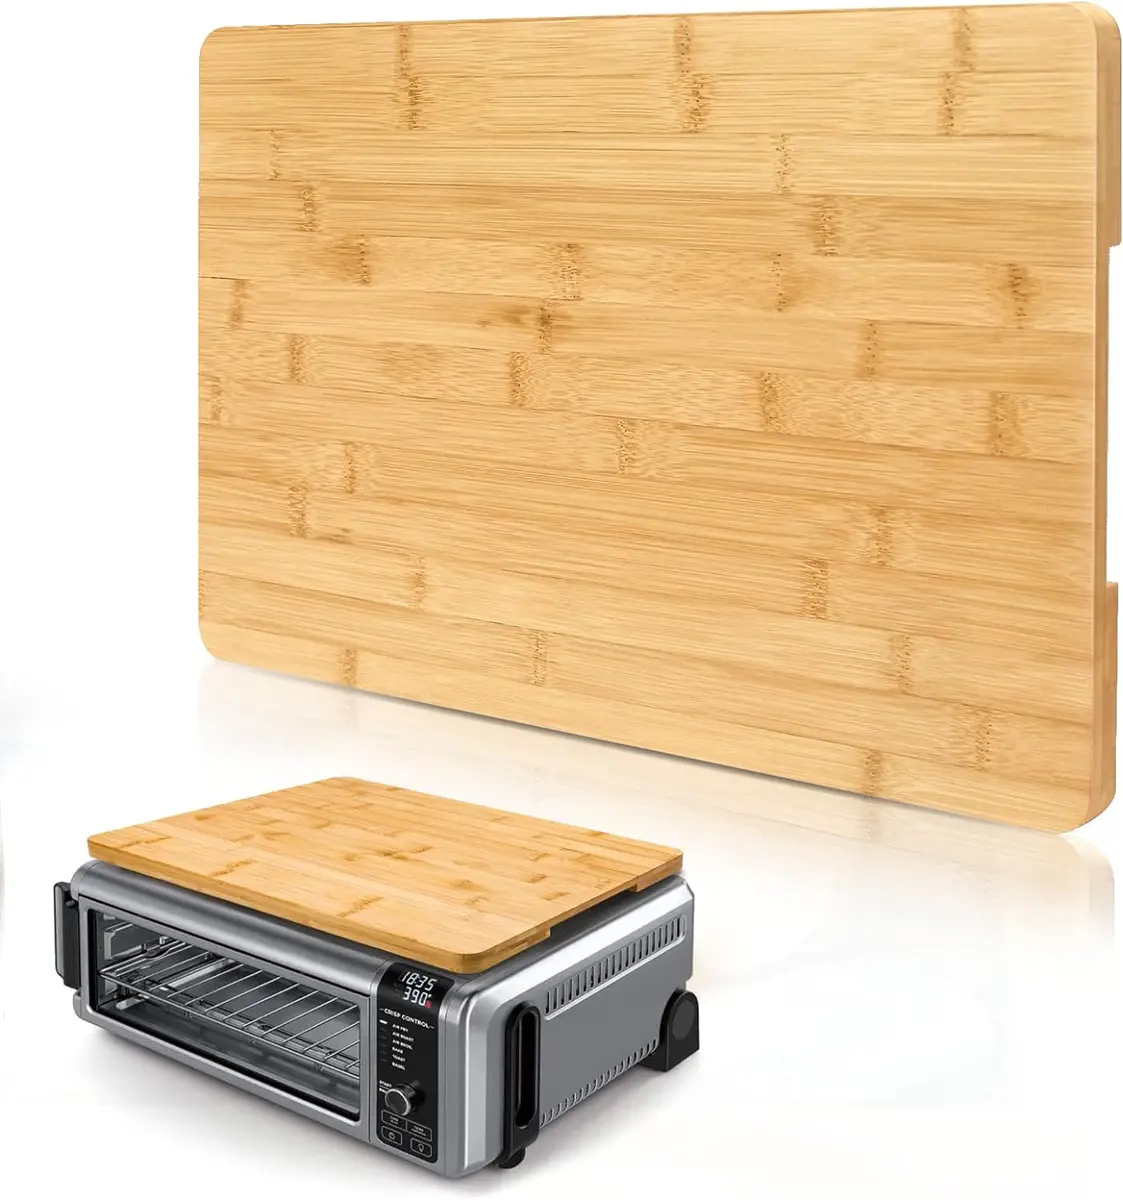 Compatible with Ninja Foodi SP101 SP201 SP301 Cutting Board, Heat